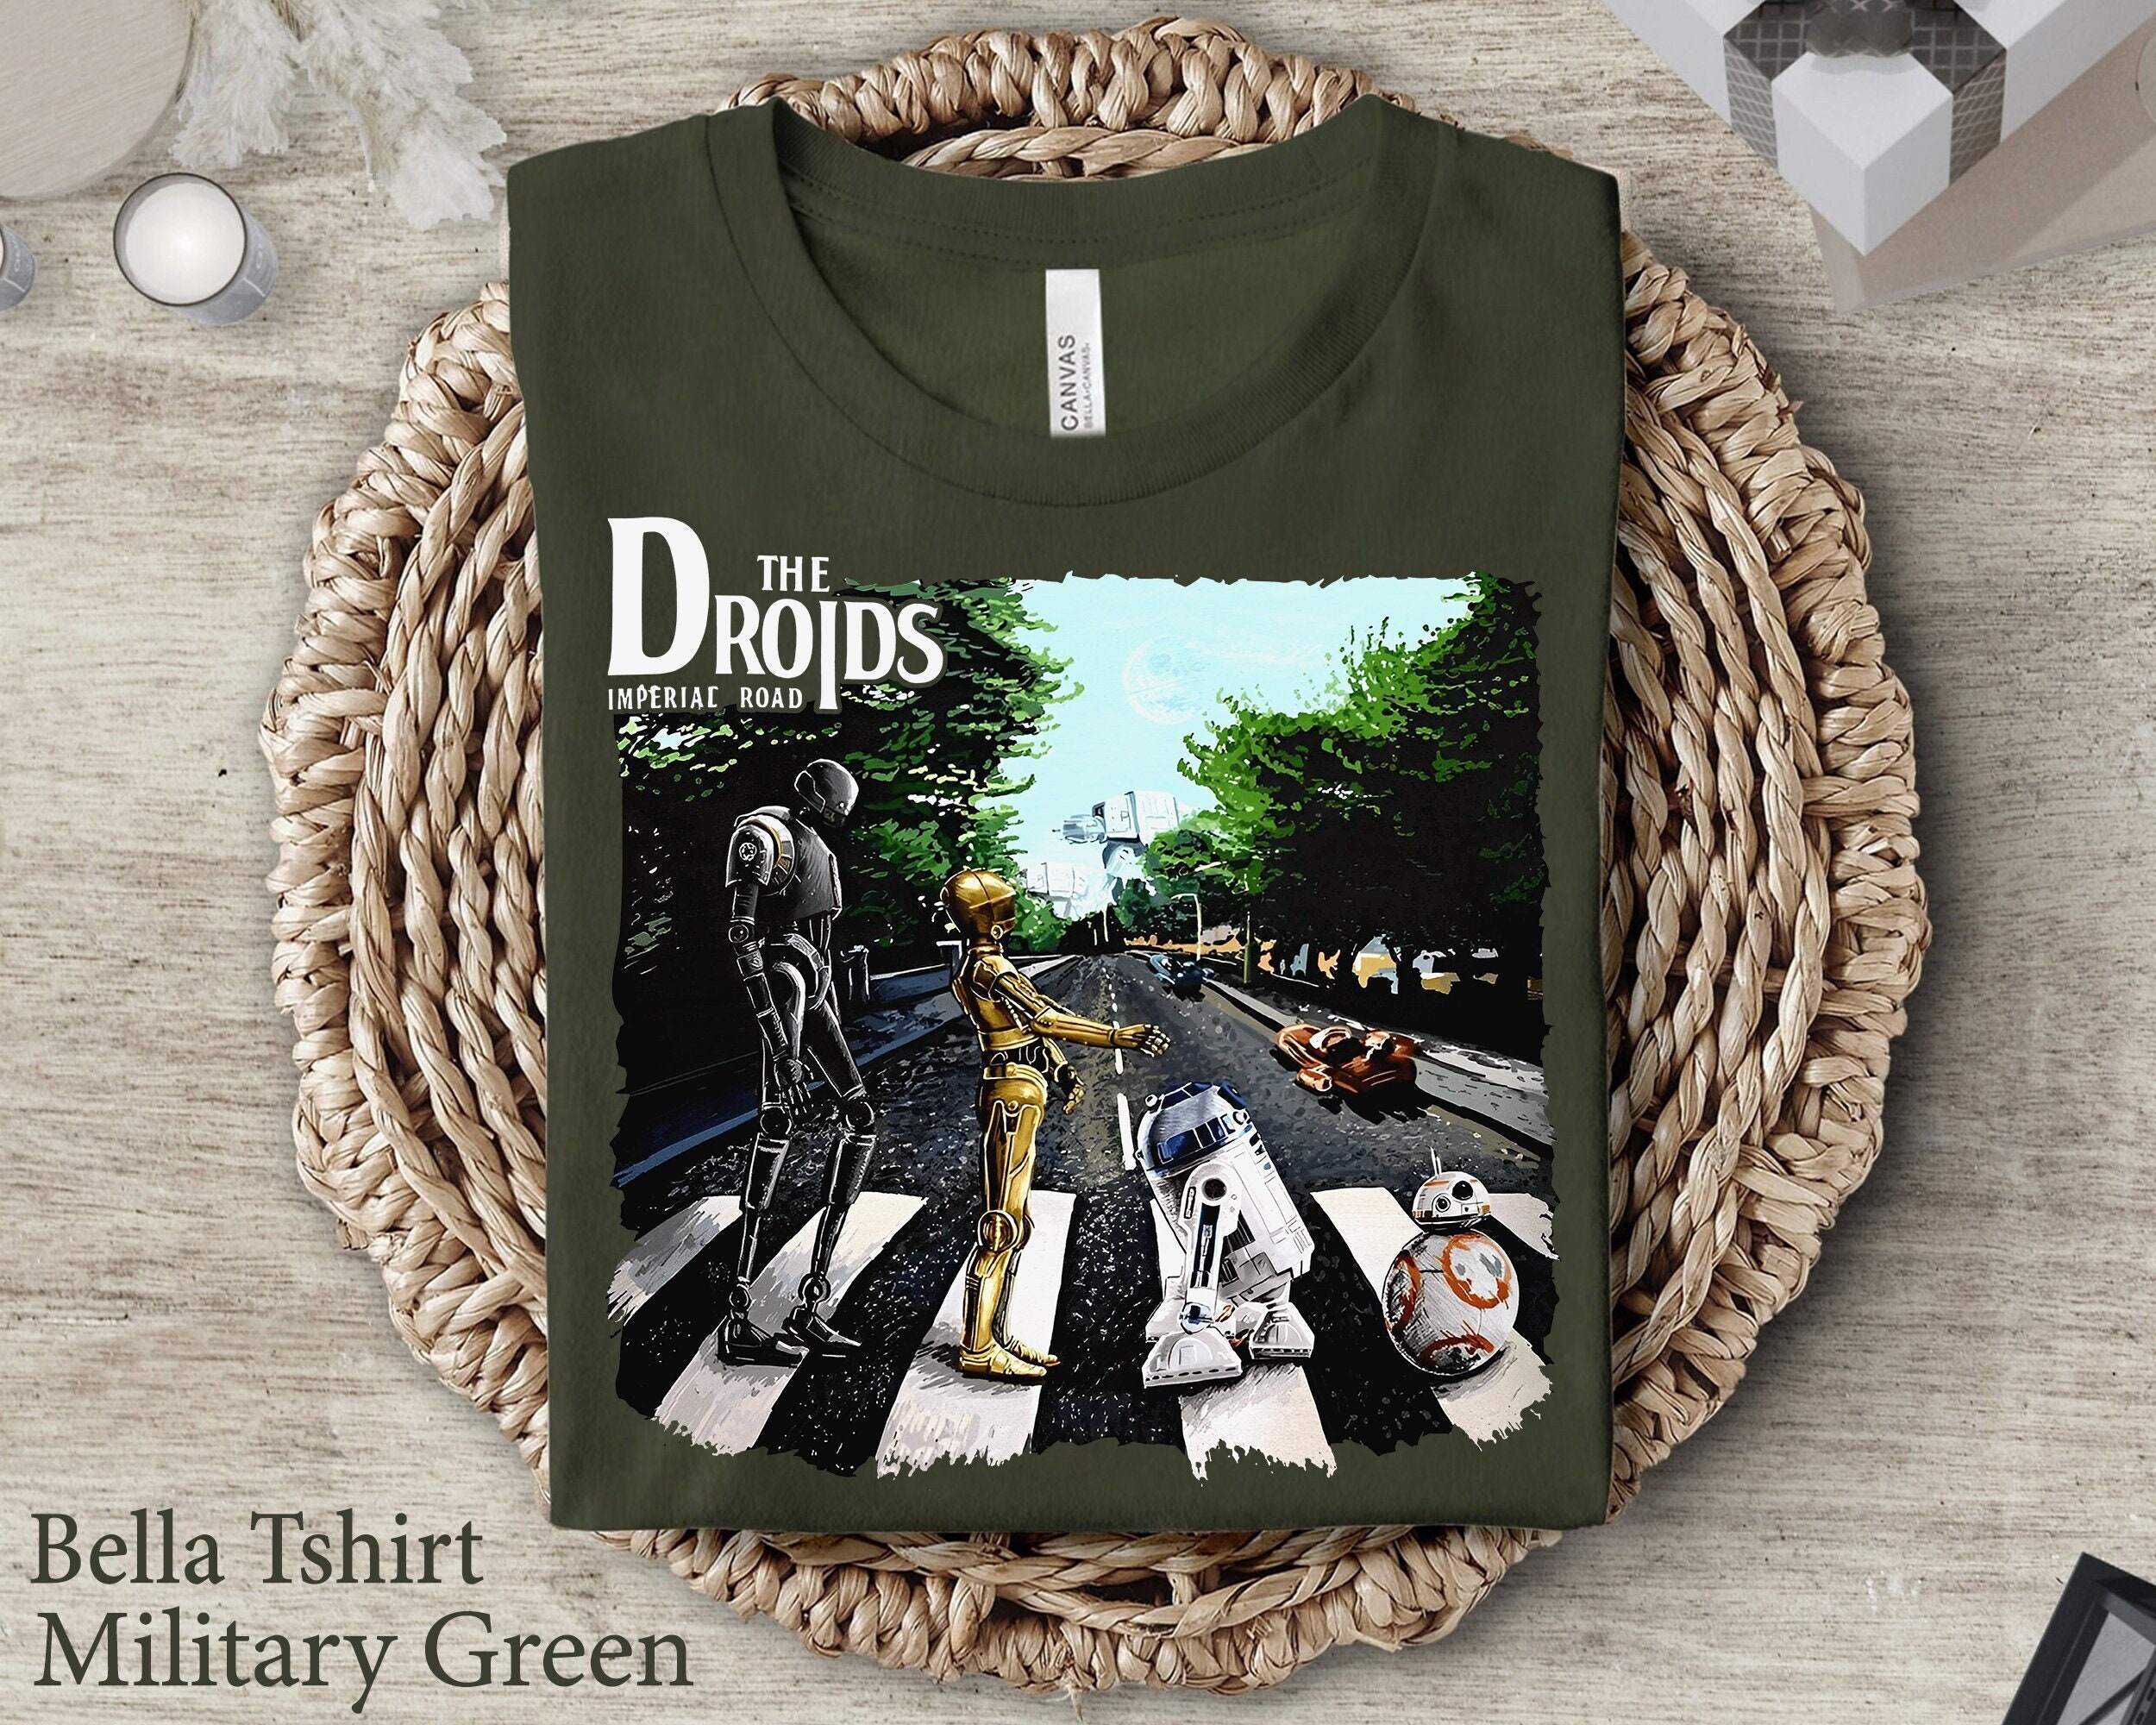 Beatles T Shirts Abbey Road - Etsy